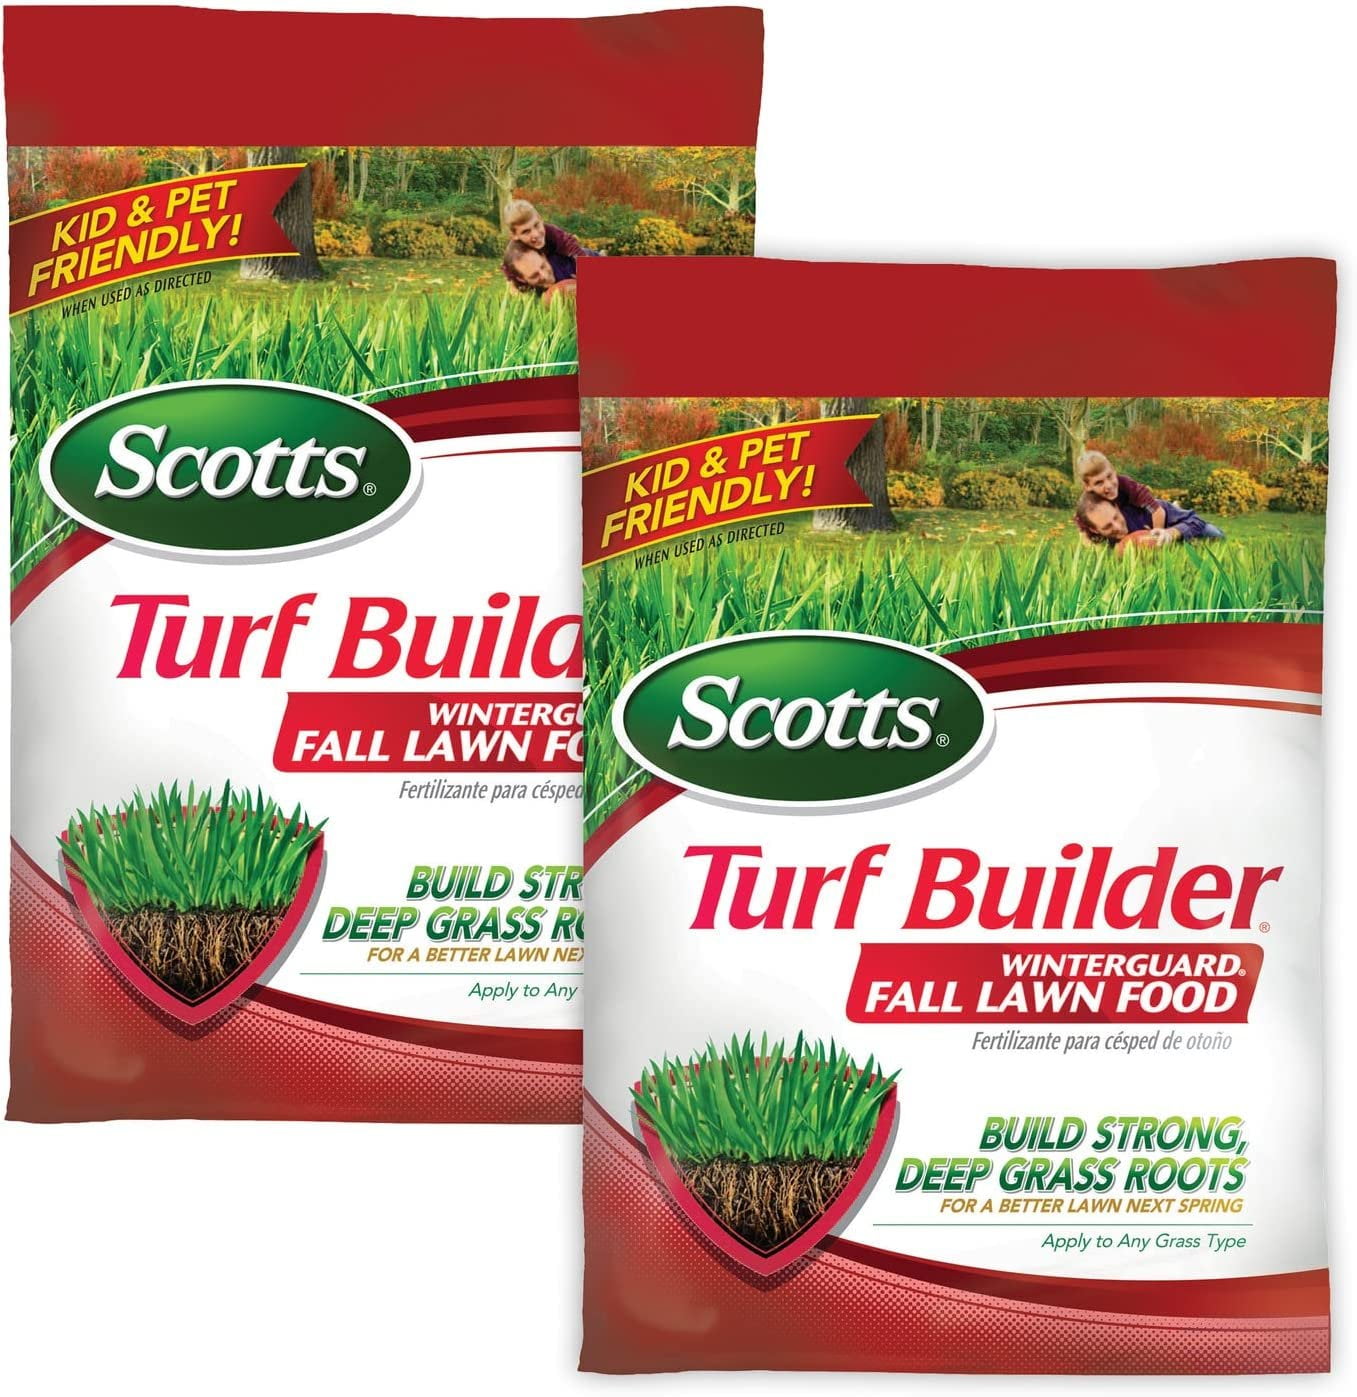 scotts-turf-builder-winterguard-fall-lawn-food-fall-fertilizer-for